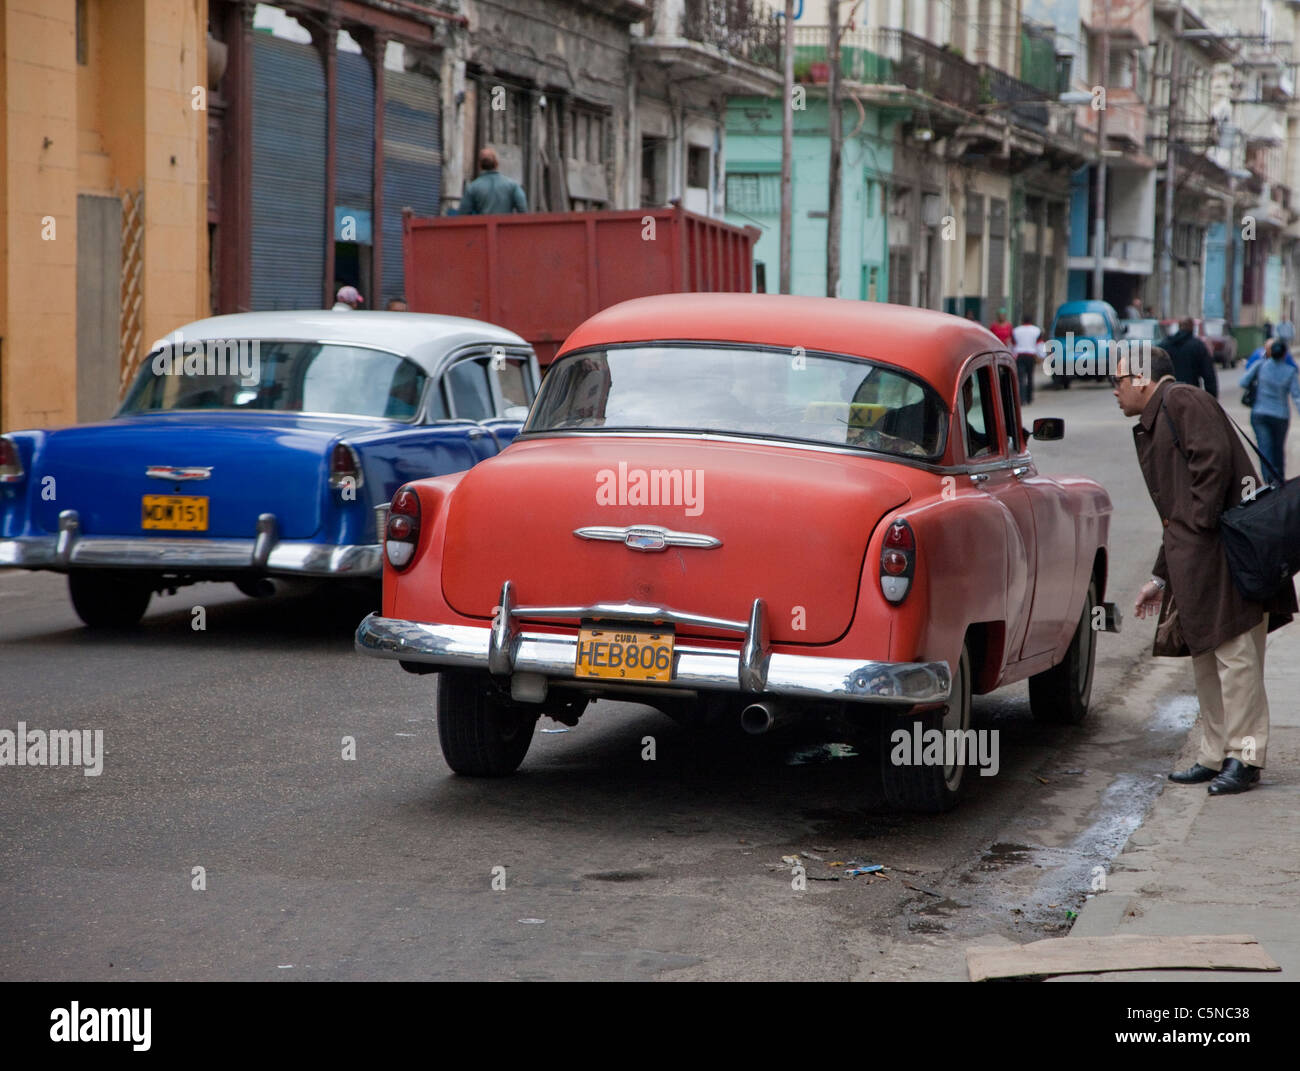 Cuba, Havana. Early Morning Central Havana Street Scene. Looking for a Taxi. 1950s Chevrolets. Stock Photo